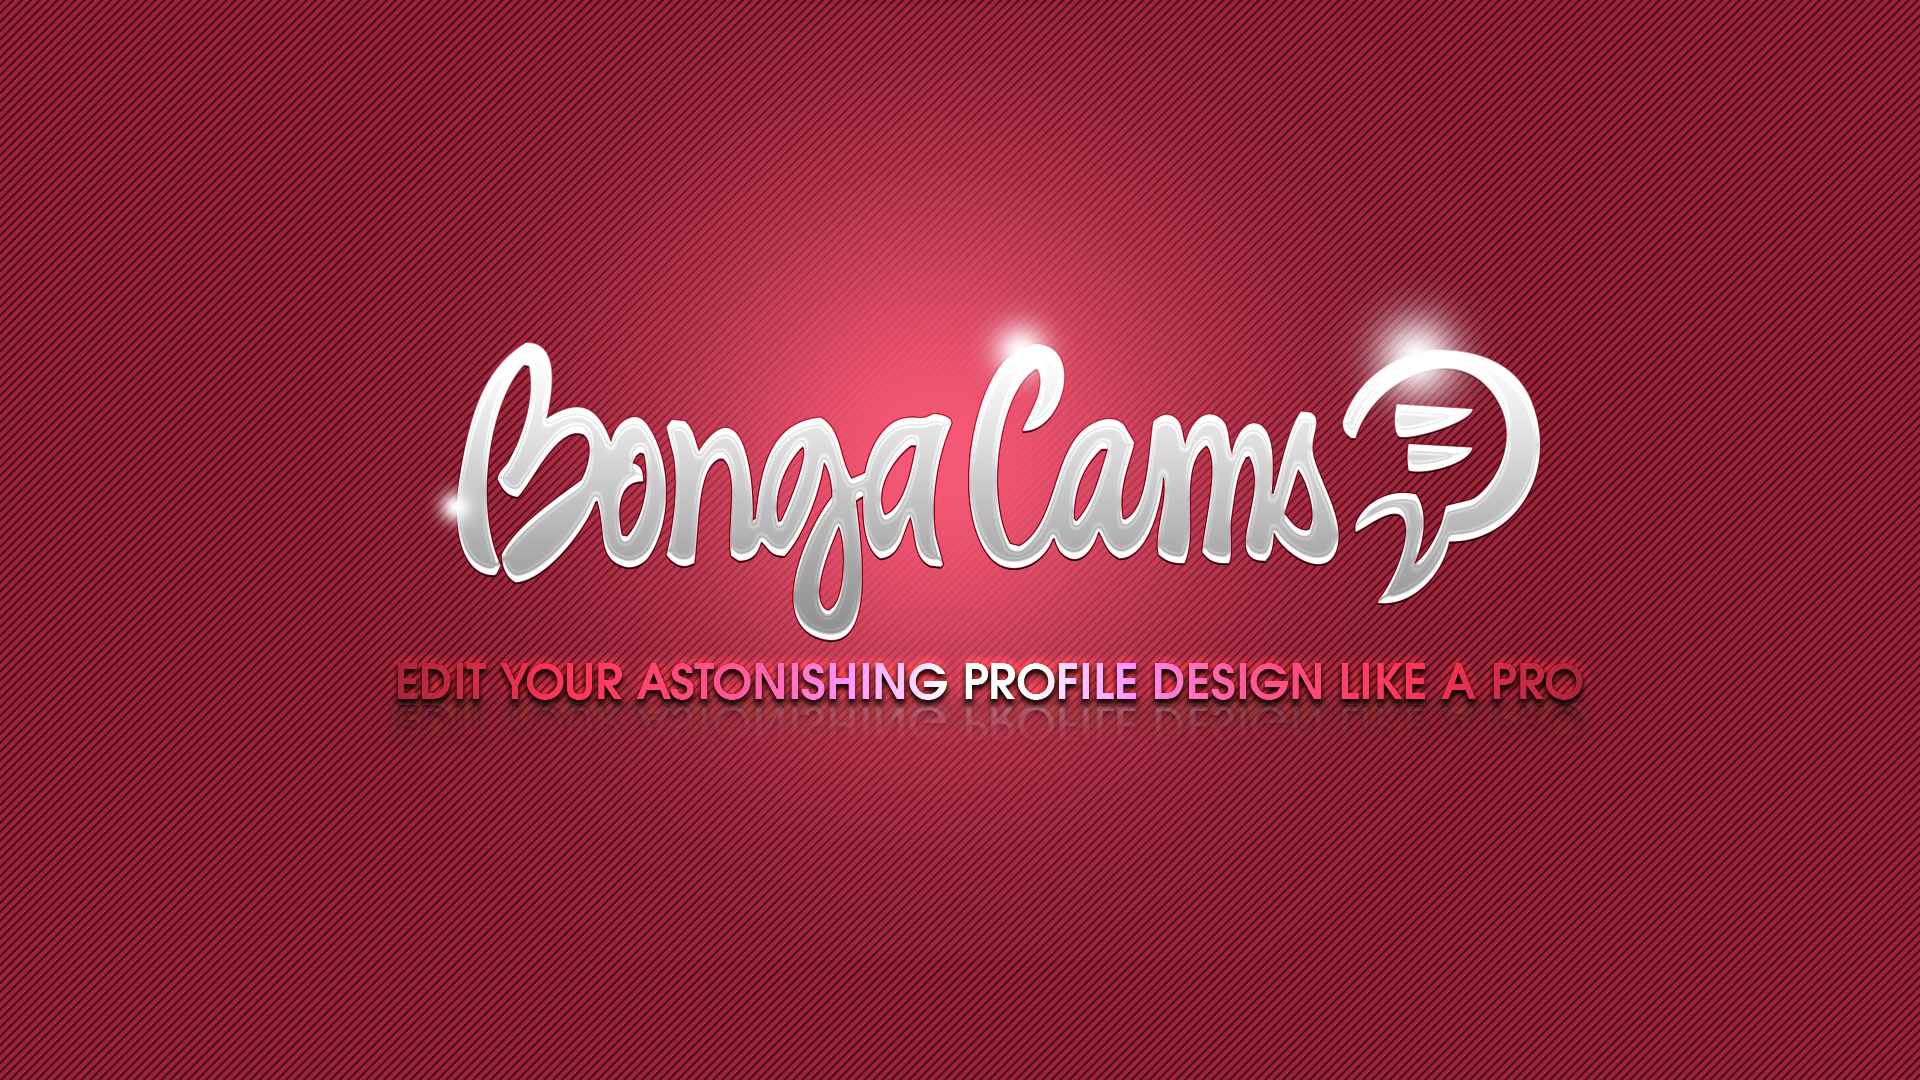 Bonga cams videos. Bongacams логотип. Бонгакамс логотип. Bongacams значок. Бонгакам видеореклама.